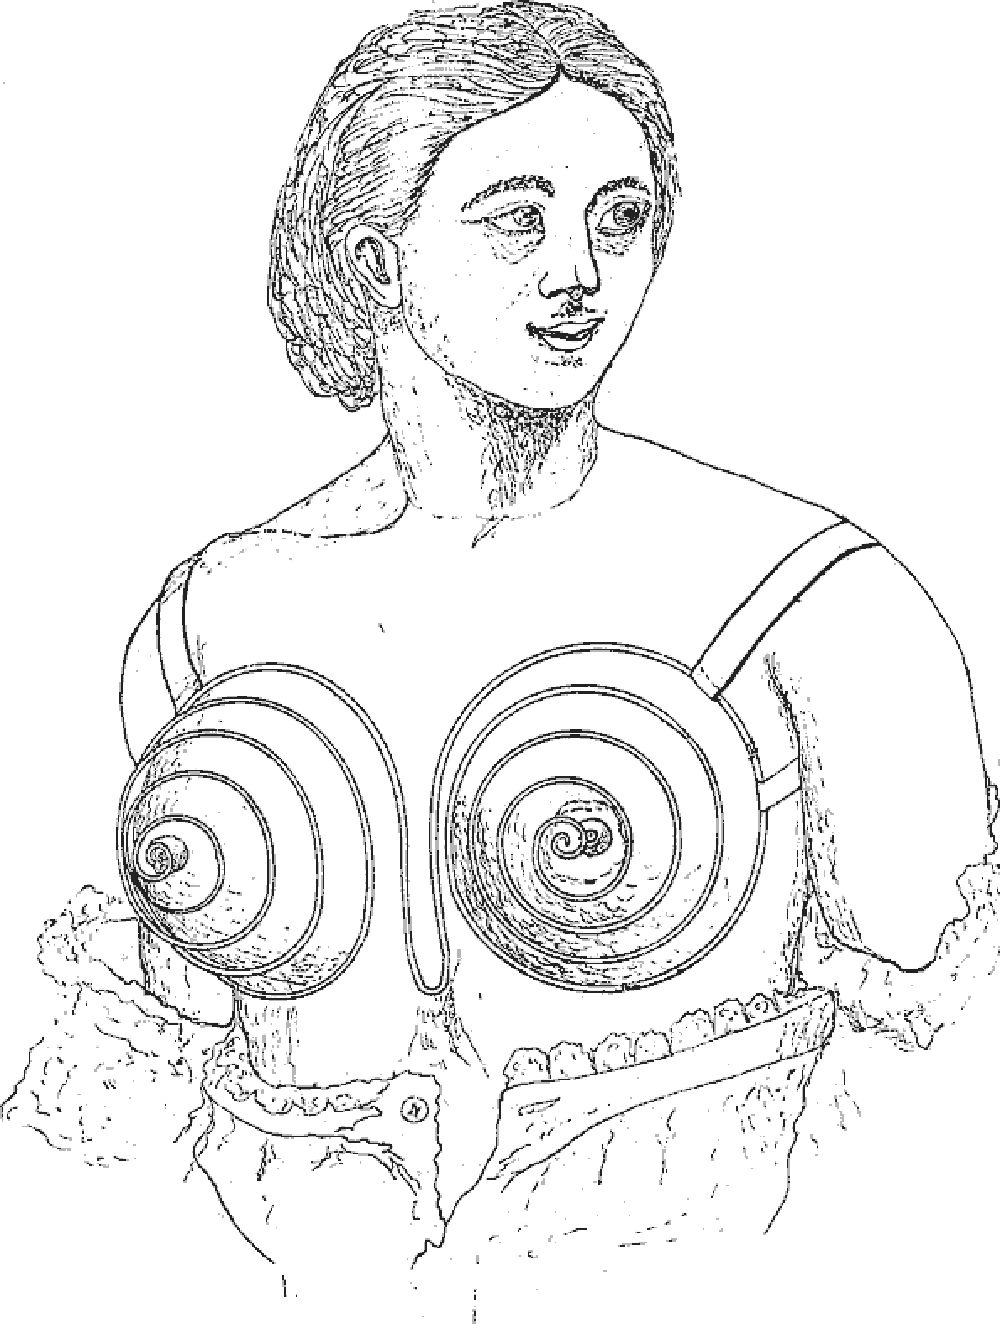 An image of a woman in a bra, 1864. - Sputnik International